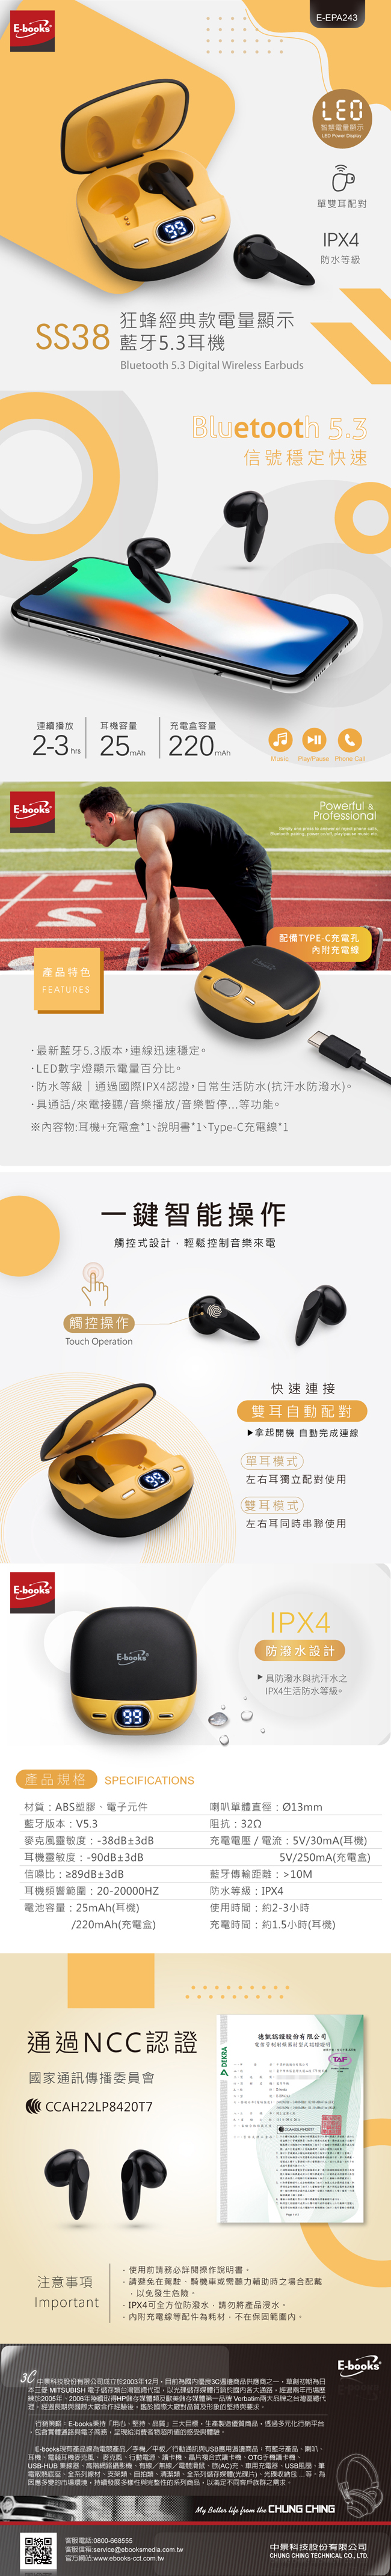 【E-books】光芒黃蜂款藍牙5.3耳機 E-EPA243 電量顯示